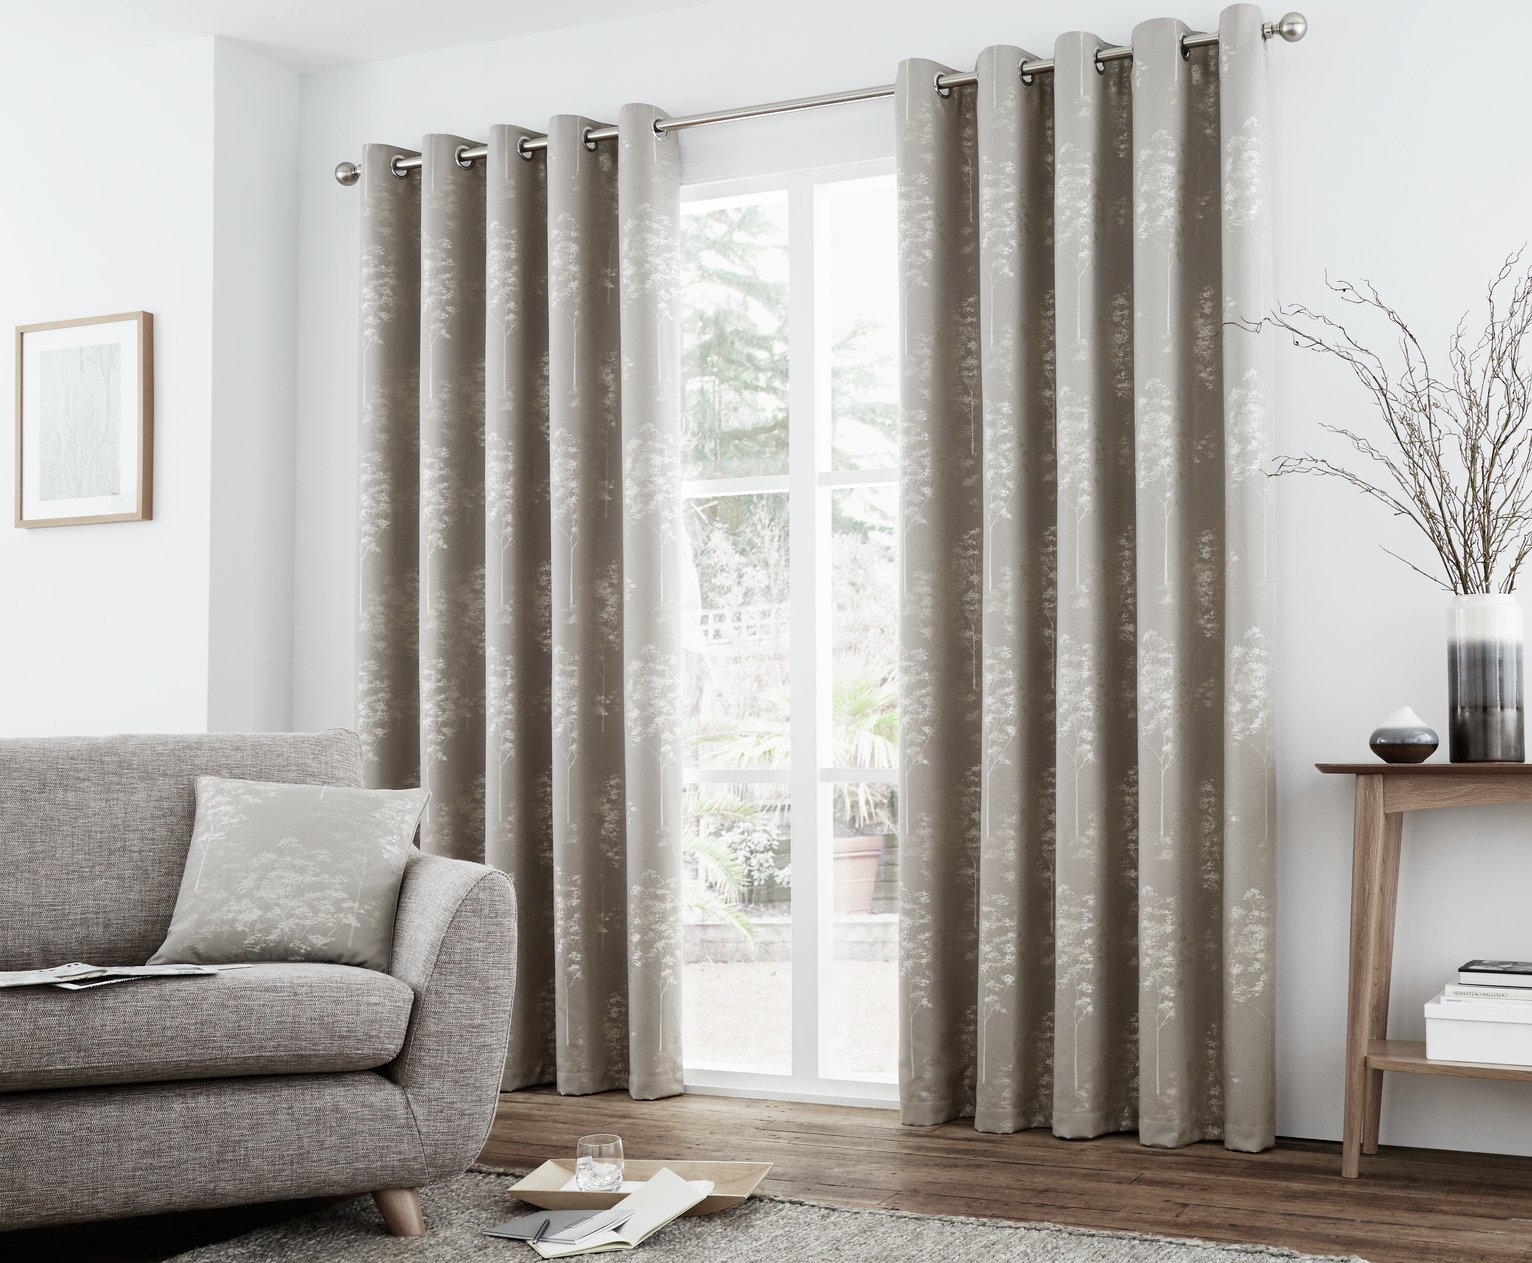 Curtina Elmwood Lined Curtains - 168x183cm - Stone